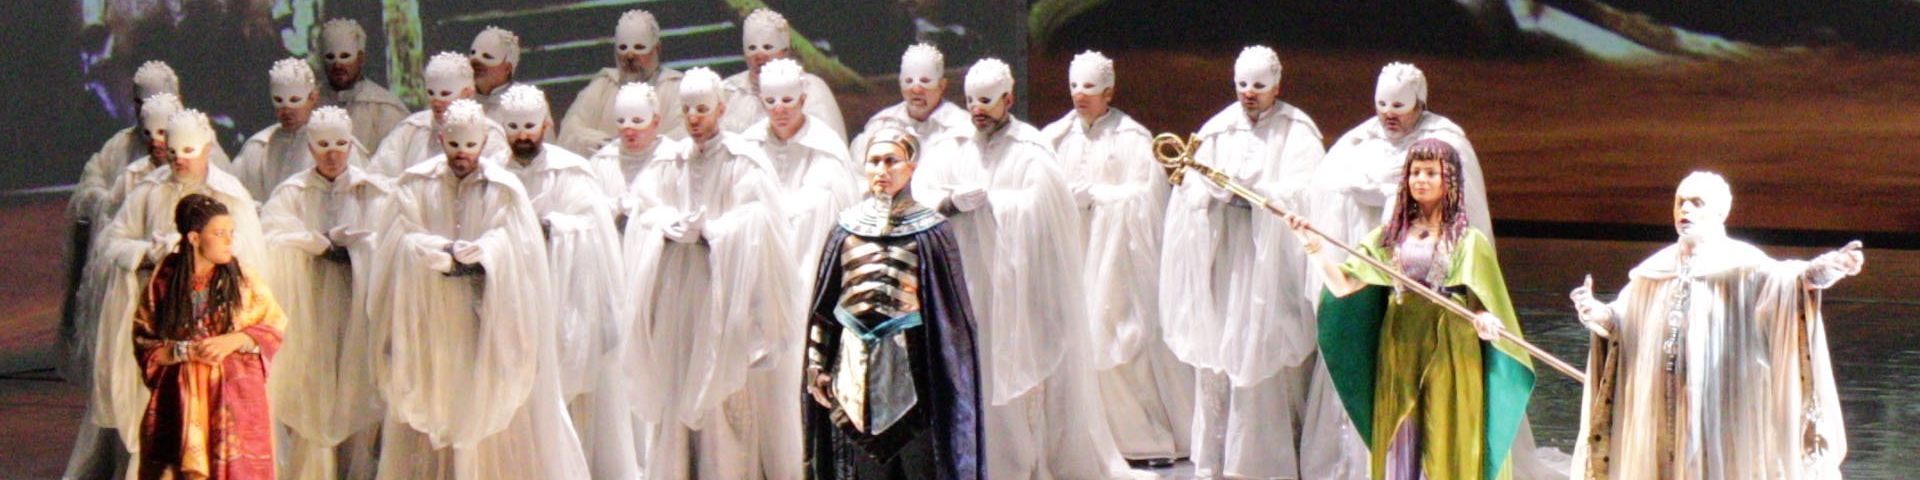 The cast of Verdi’s Aida on stage at the Teatro Carlo Felice